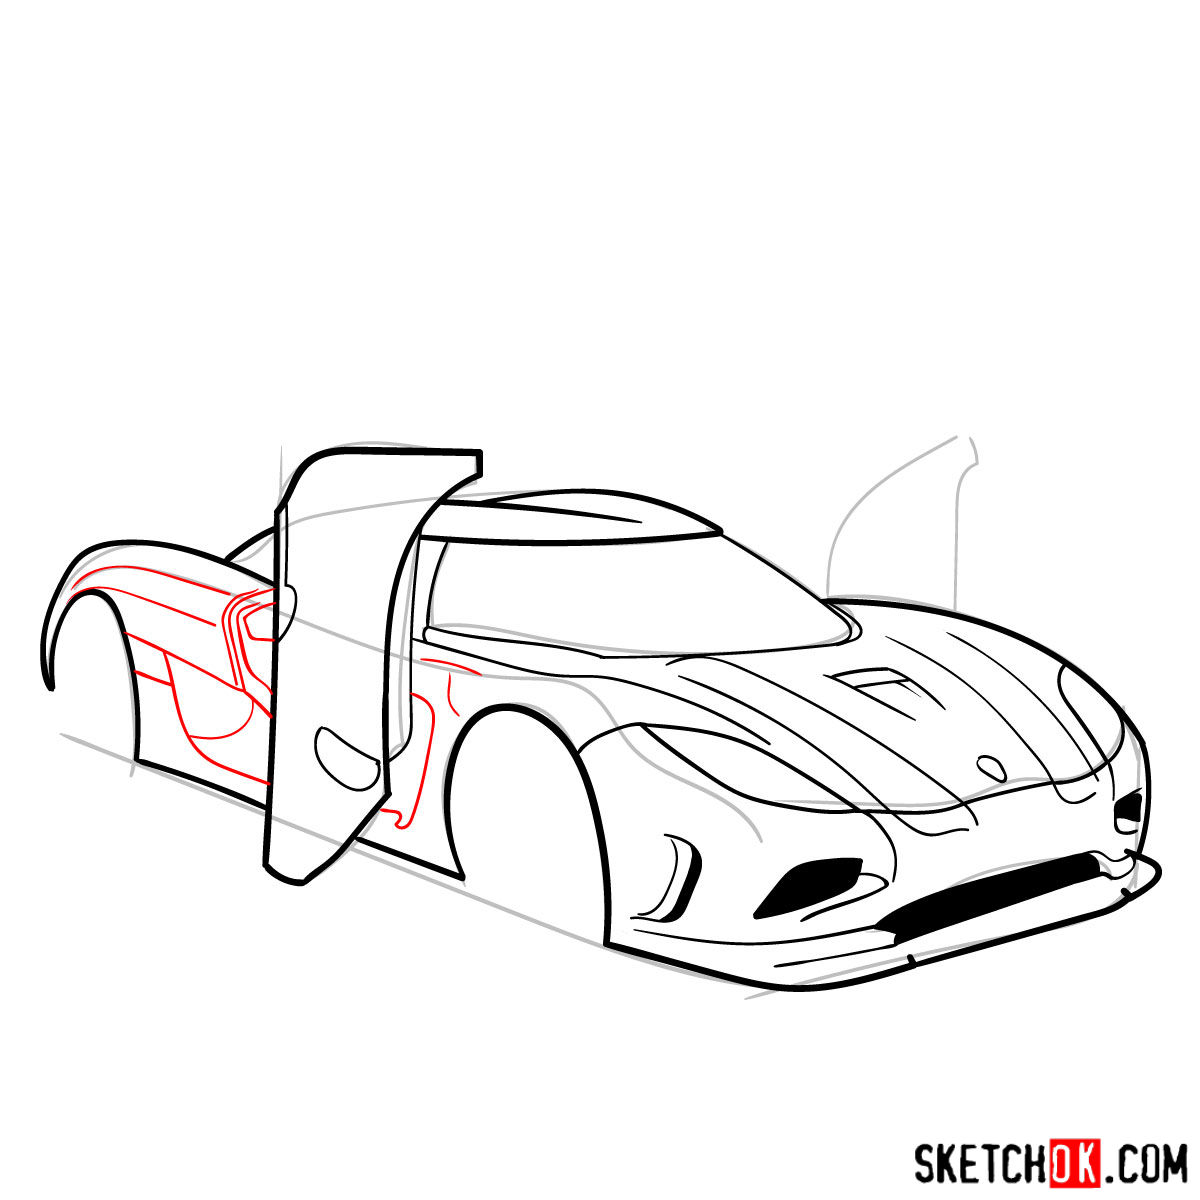 How to draw Koenigsegg Agera R Oman - step 09